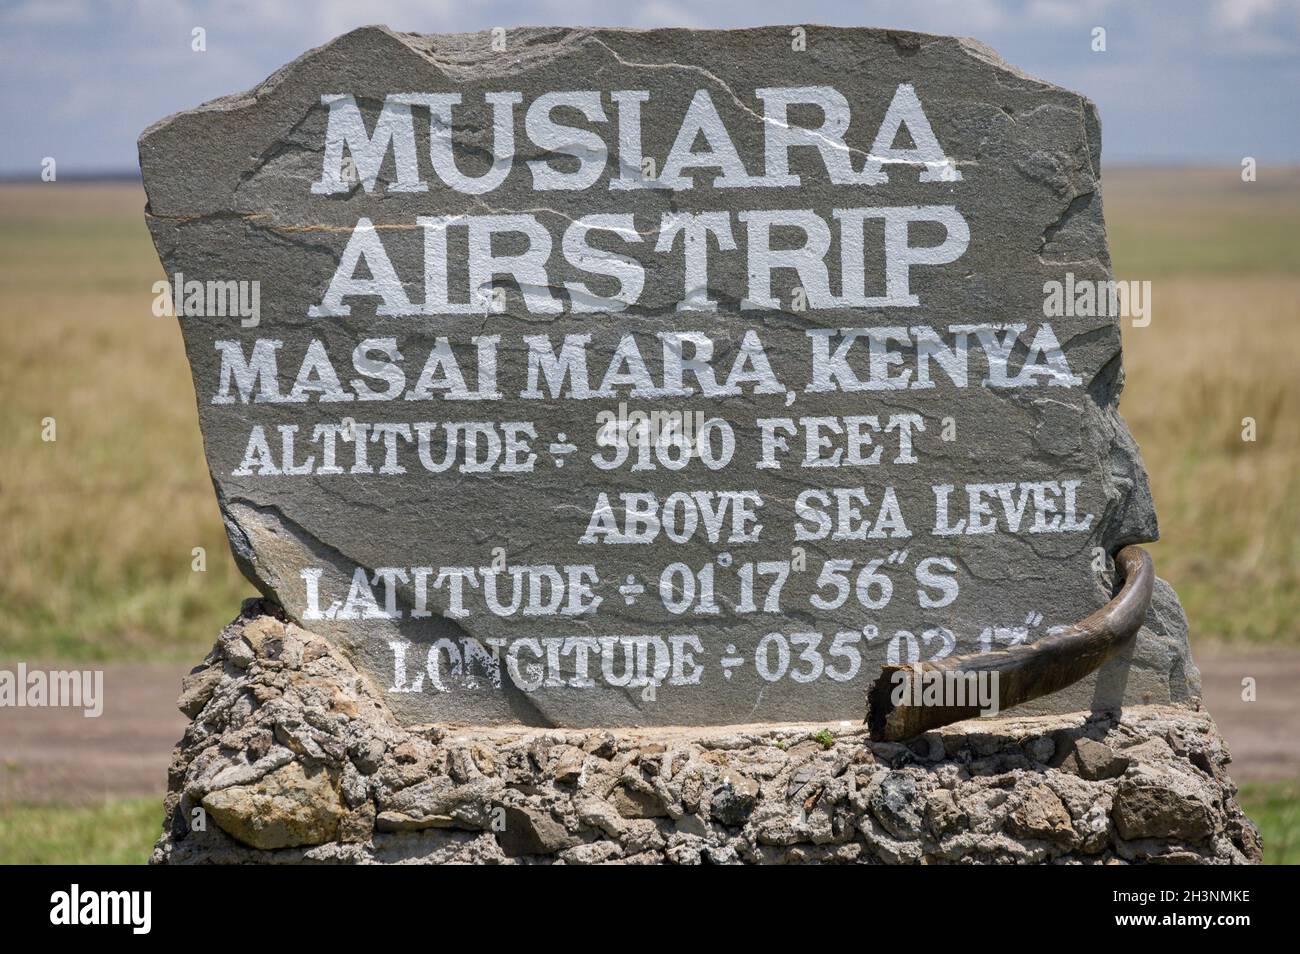 Musiara airstrip stone sign with details of location and altitude, Masai Mara, Kenya Stock Photo